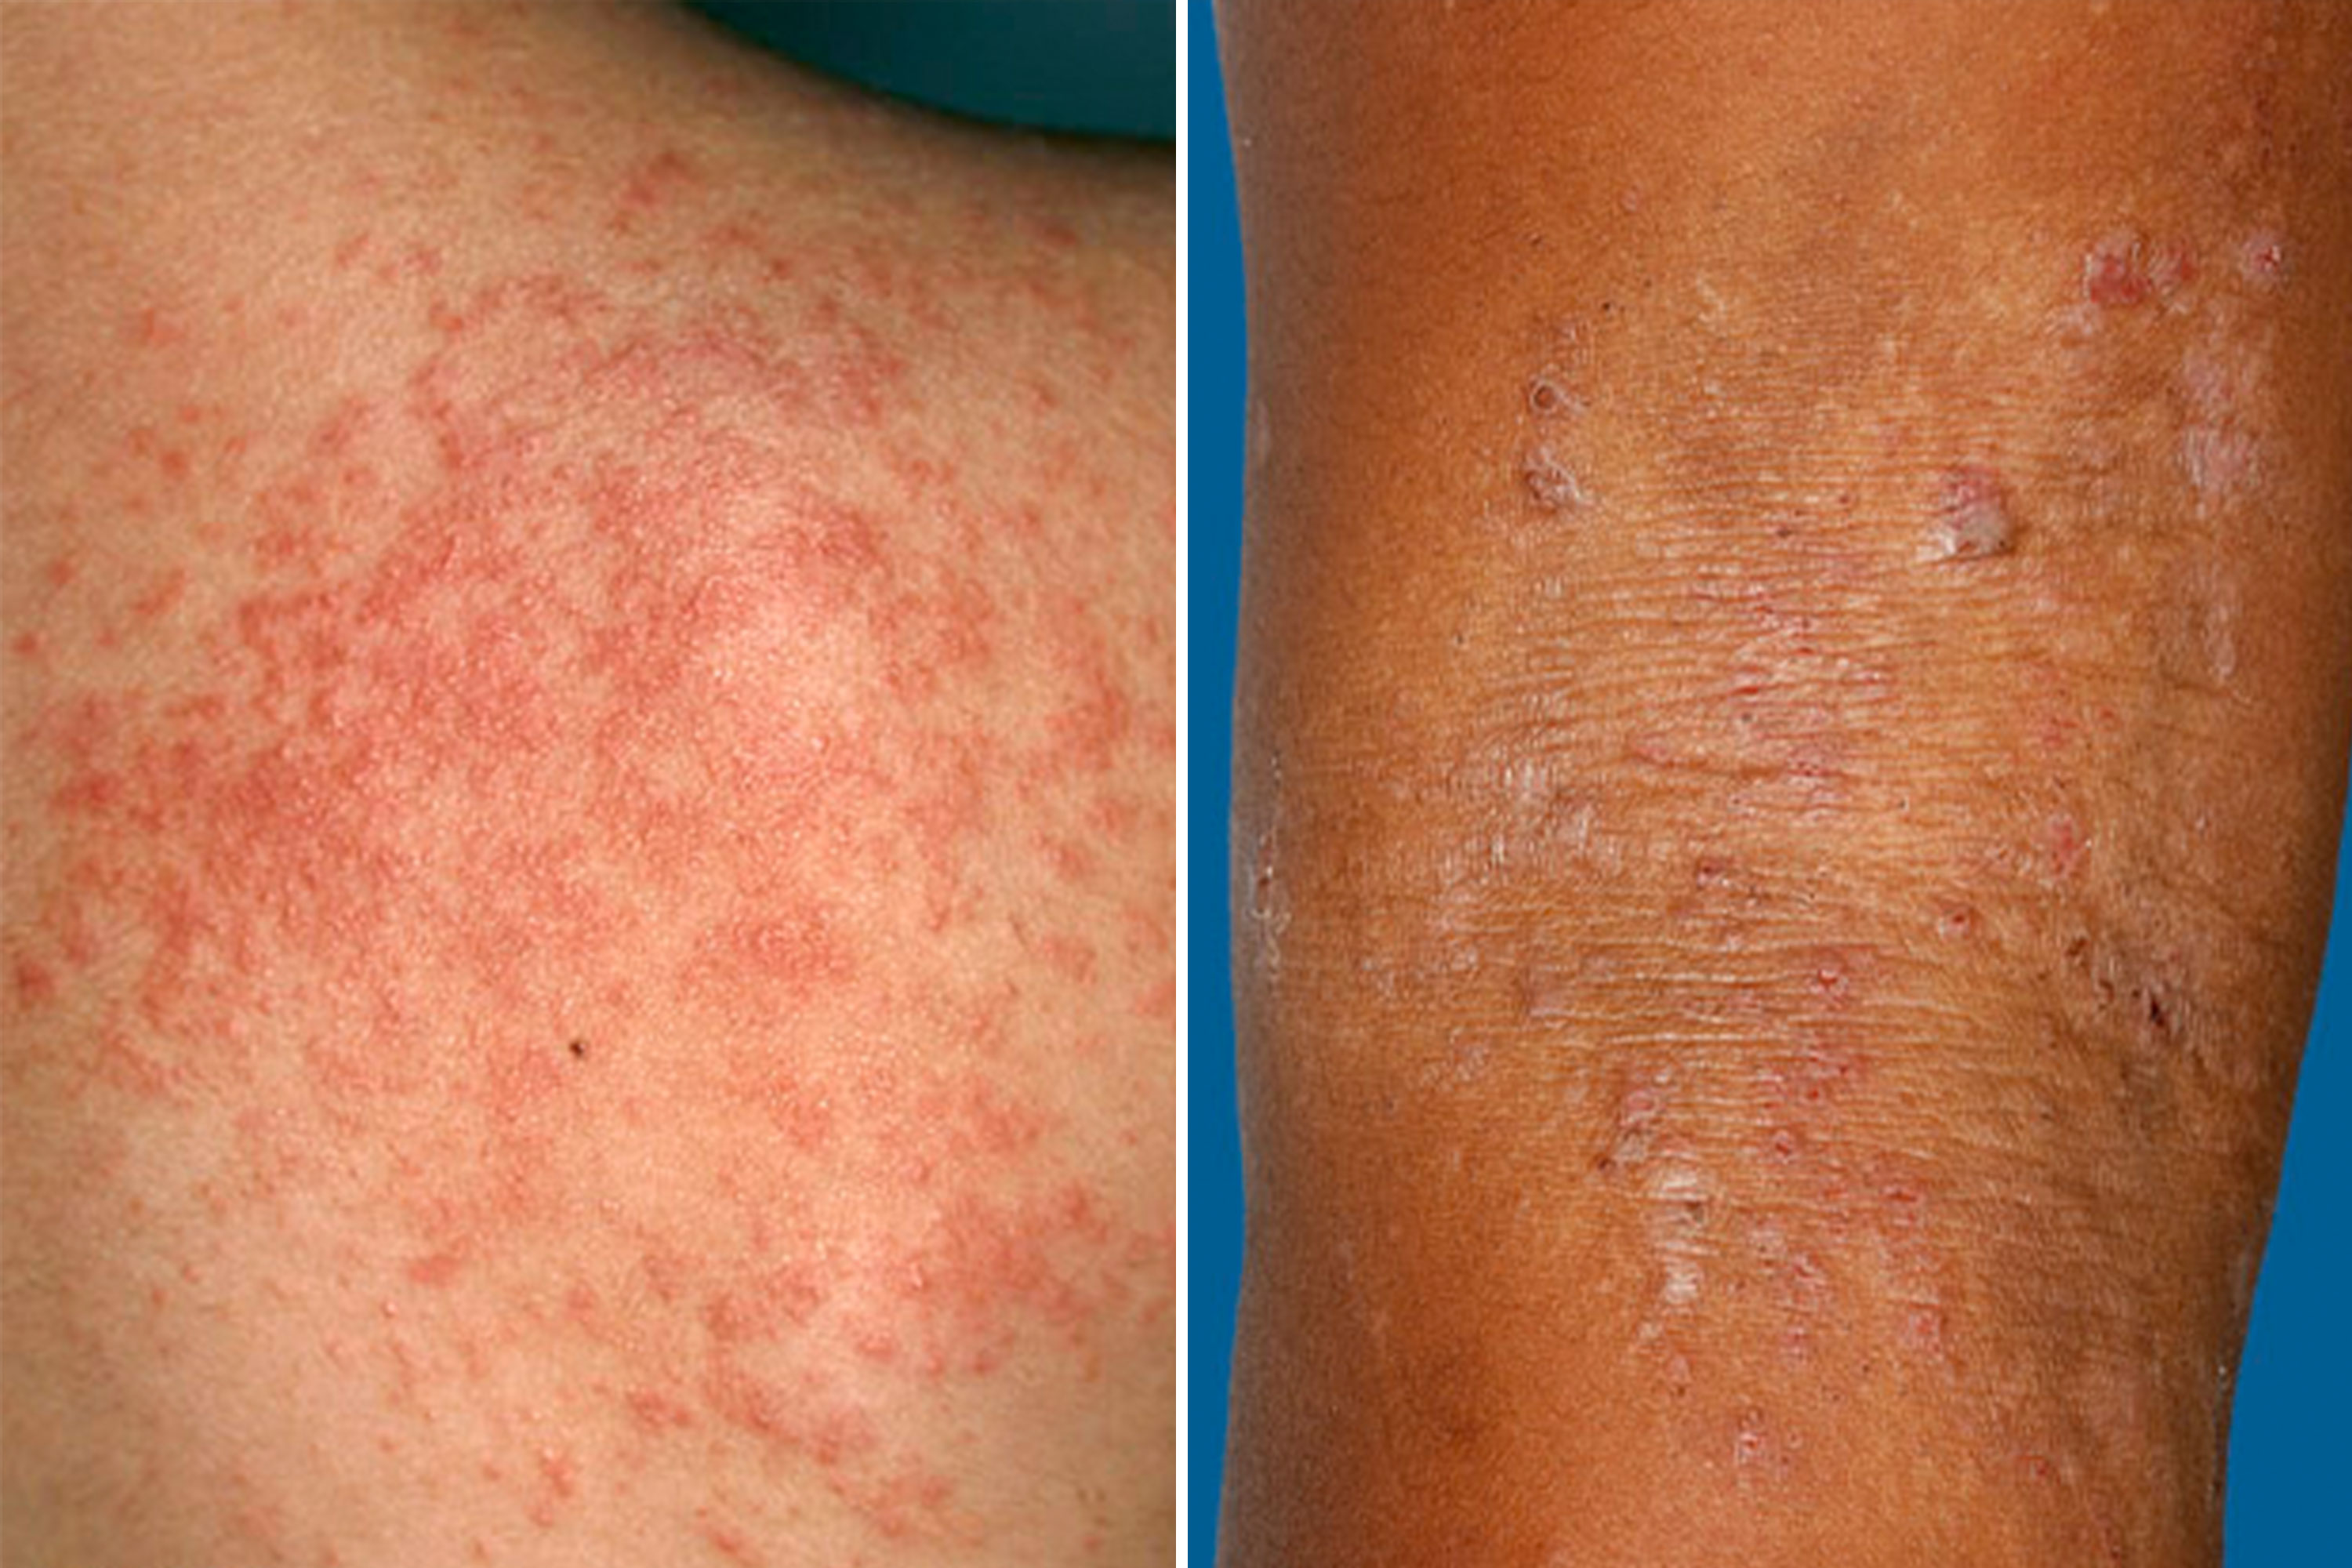 Heat Rash vs. Eczema: What's the Difference?